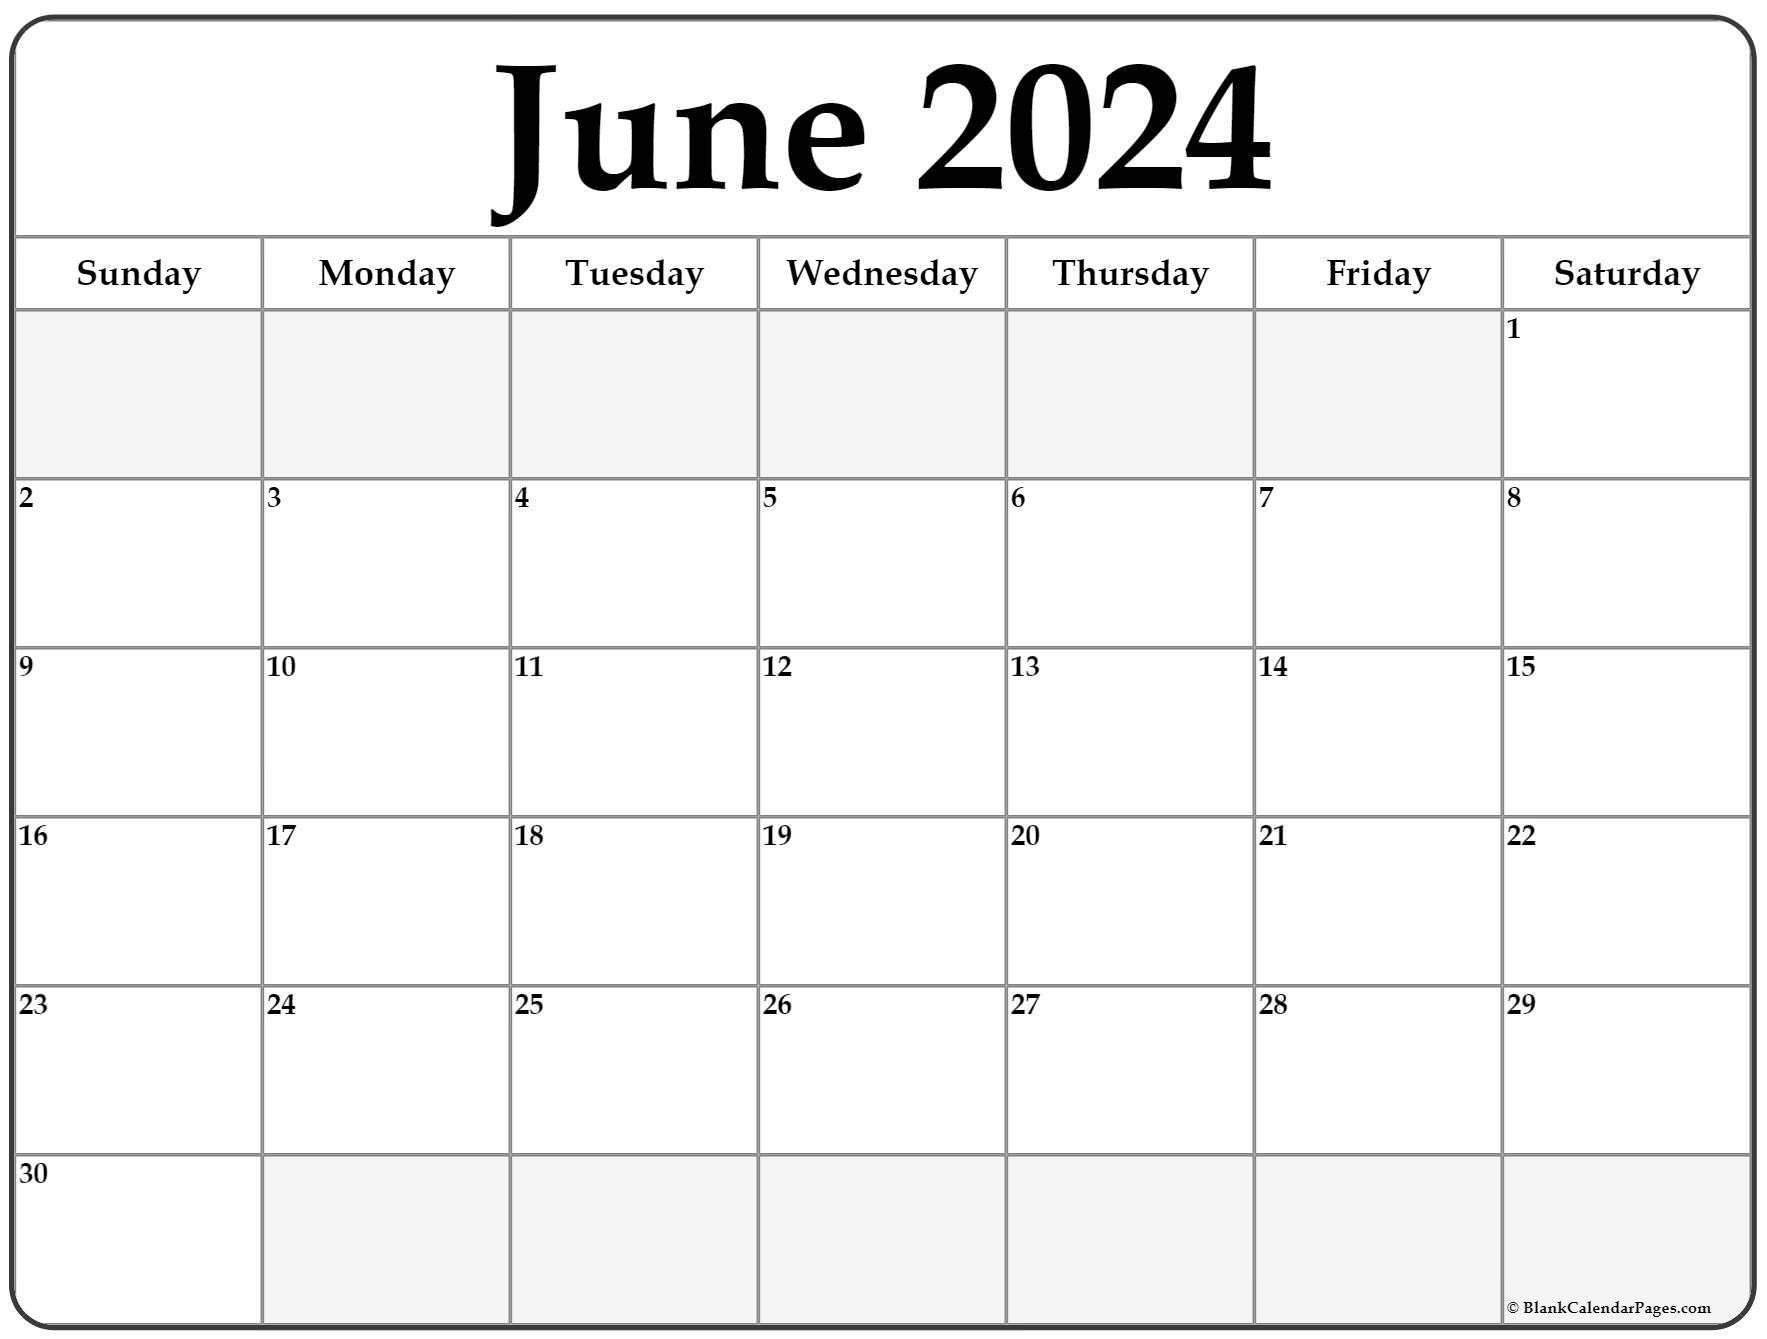 June 2024 Calendar Image